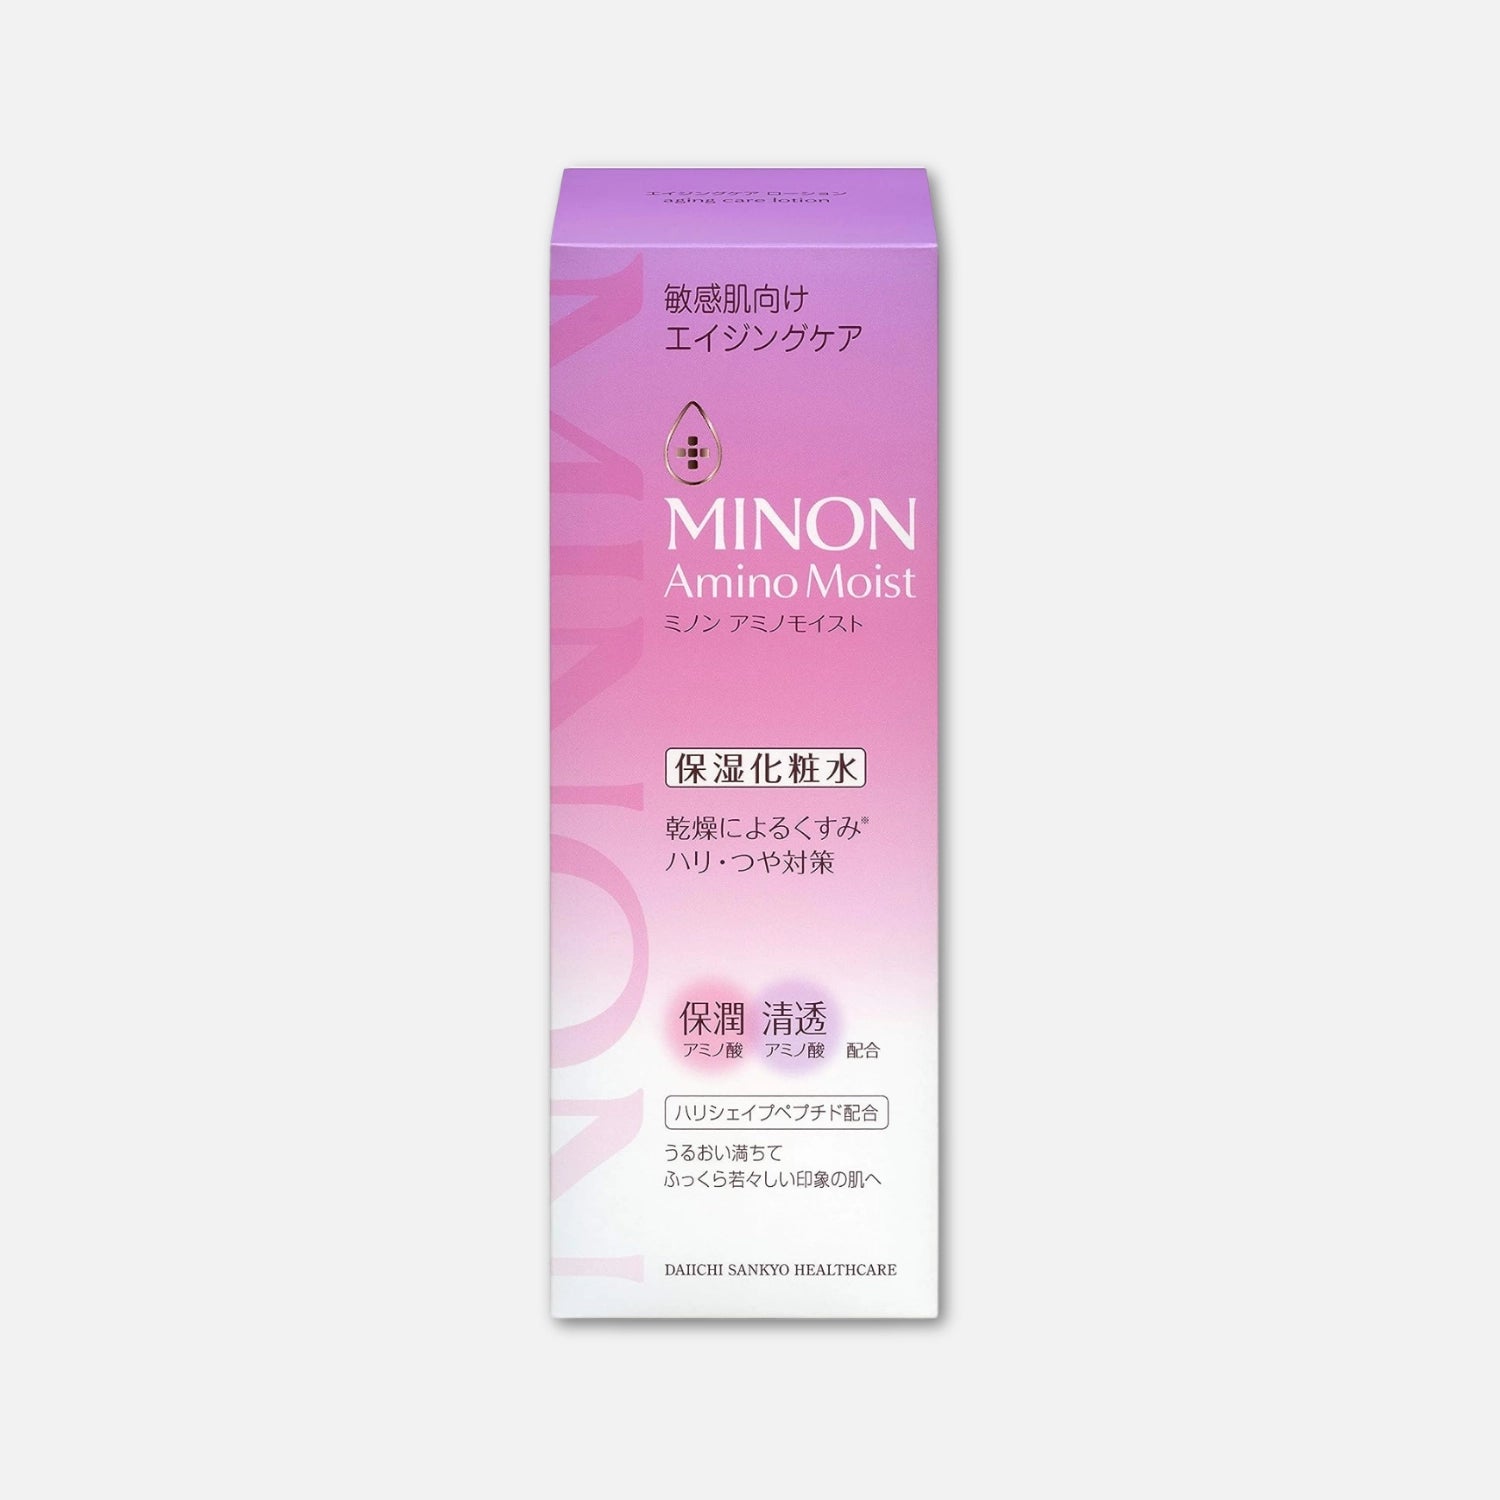 Minon Amino Moist Aging Care Lotion 150ml